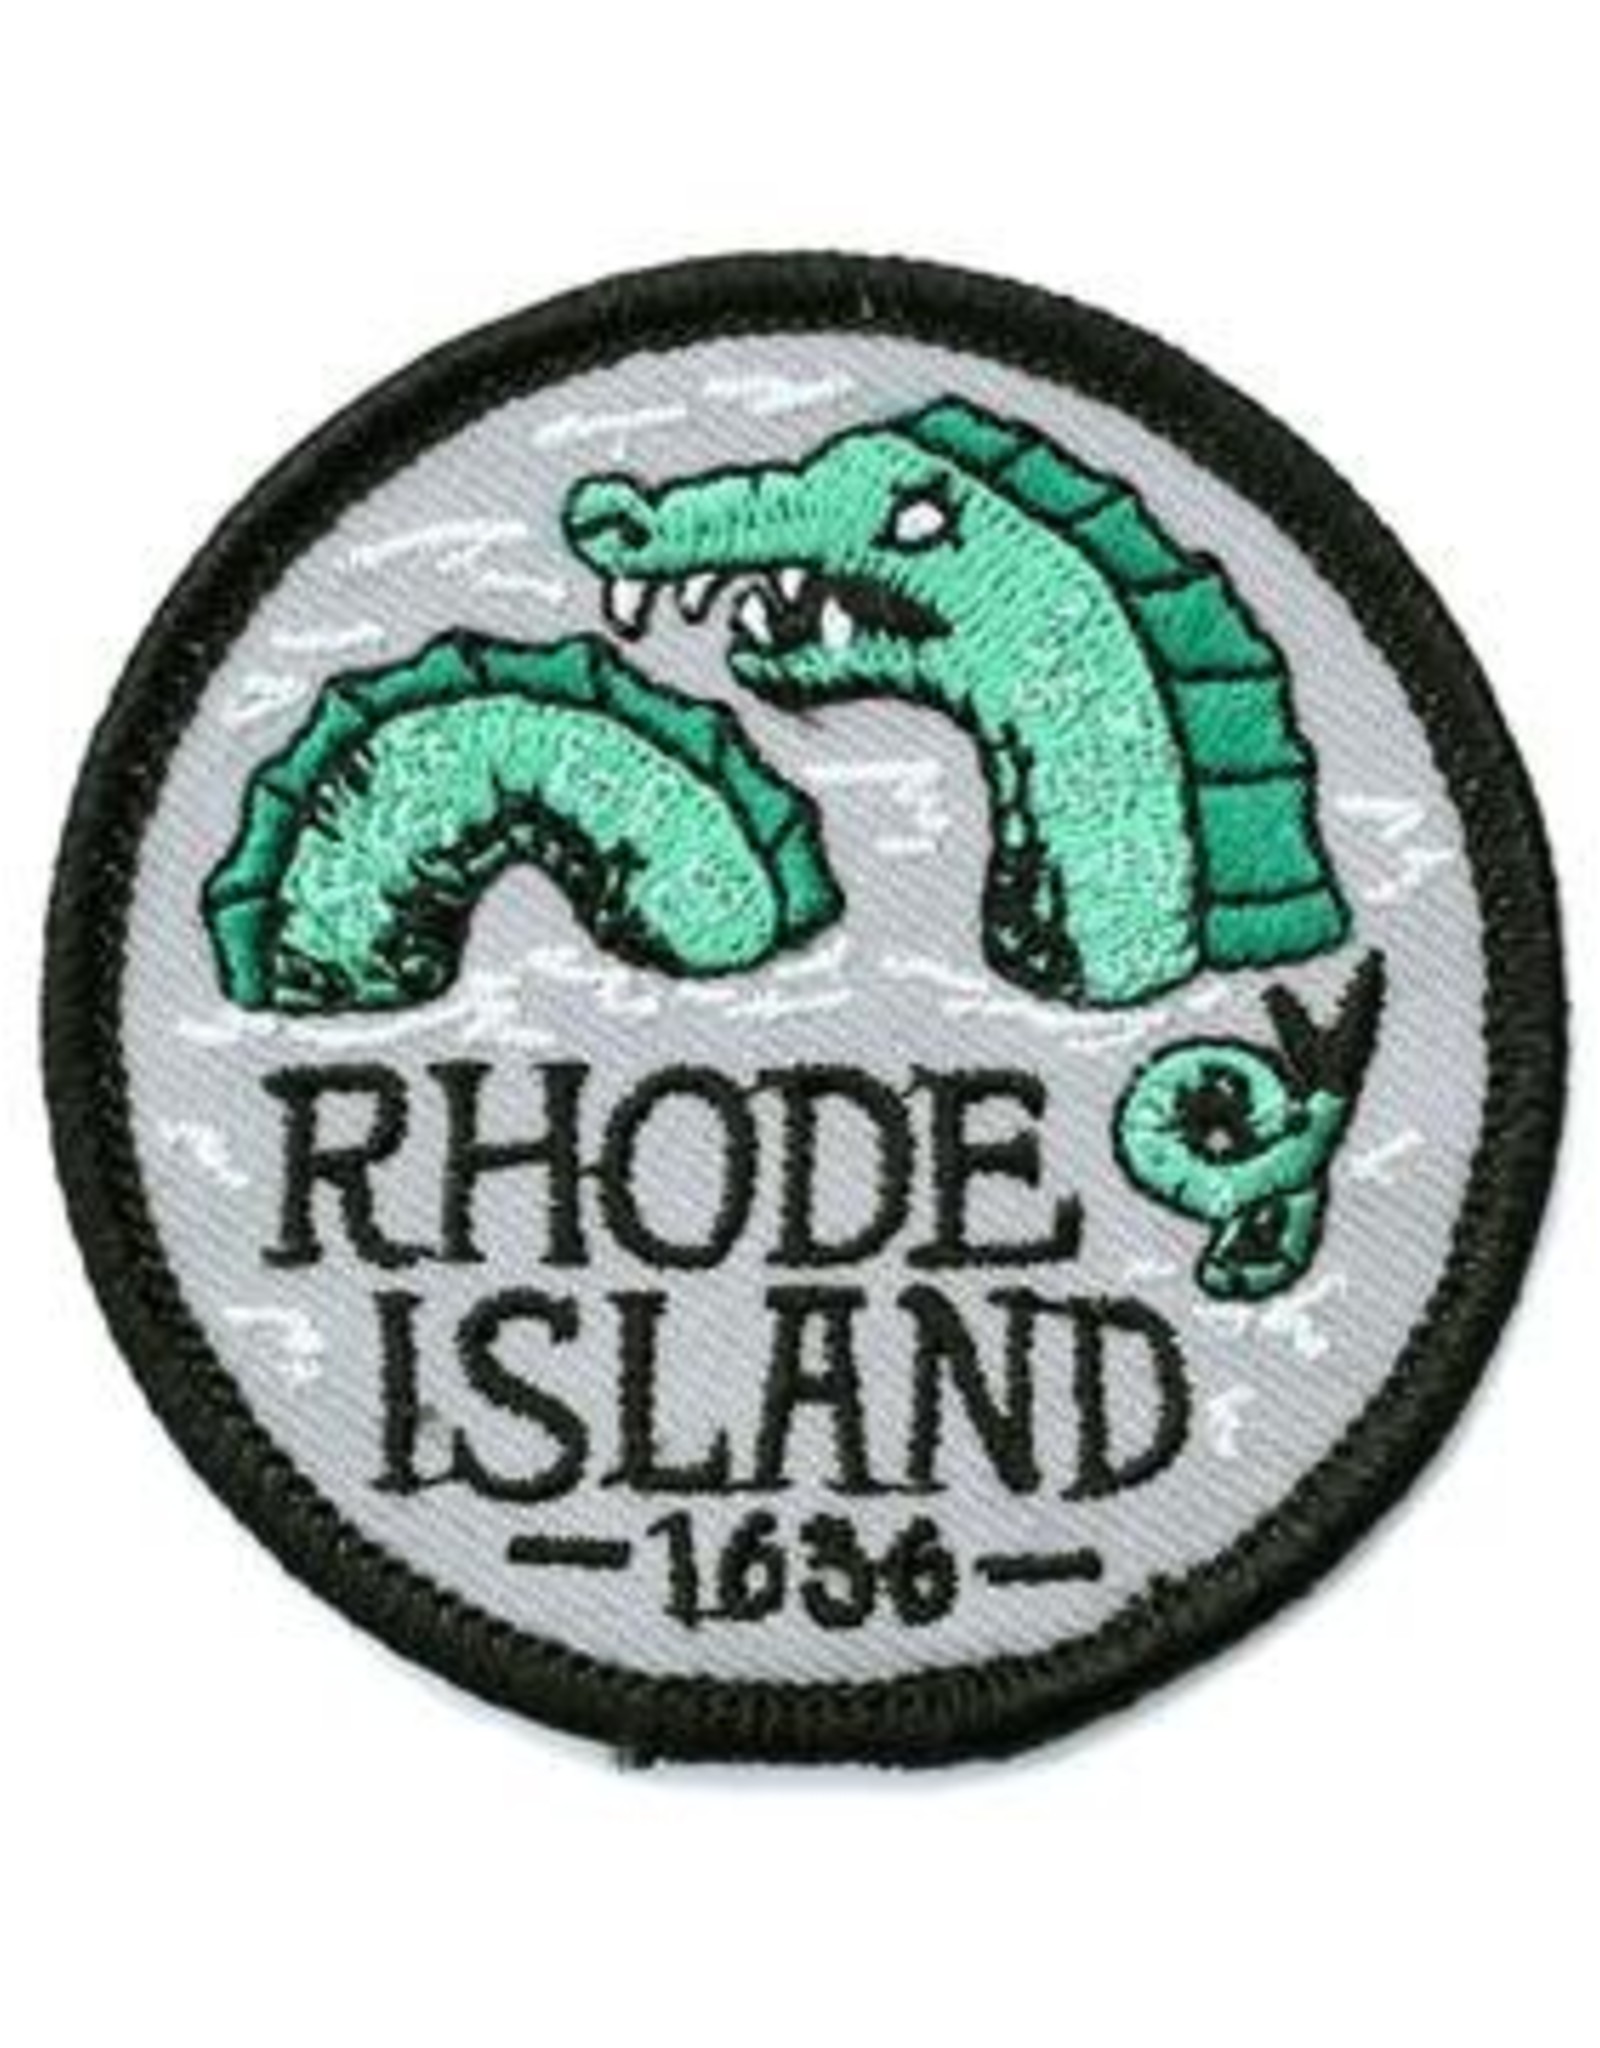 Rhode Island Sea Serpent Patch